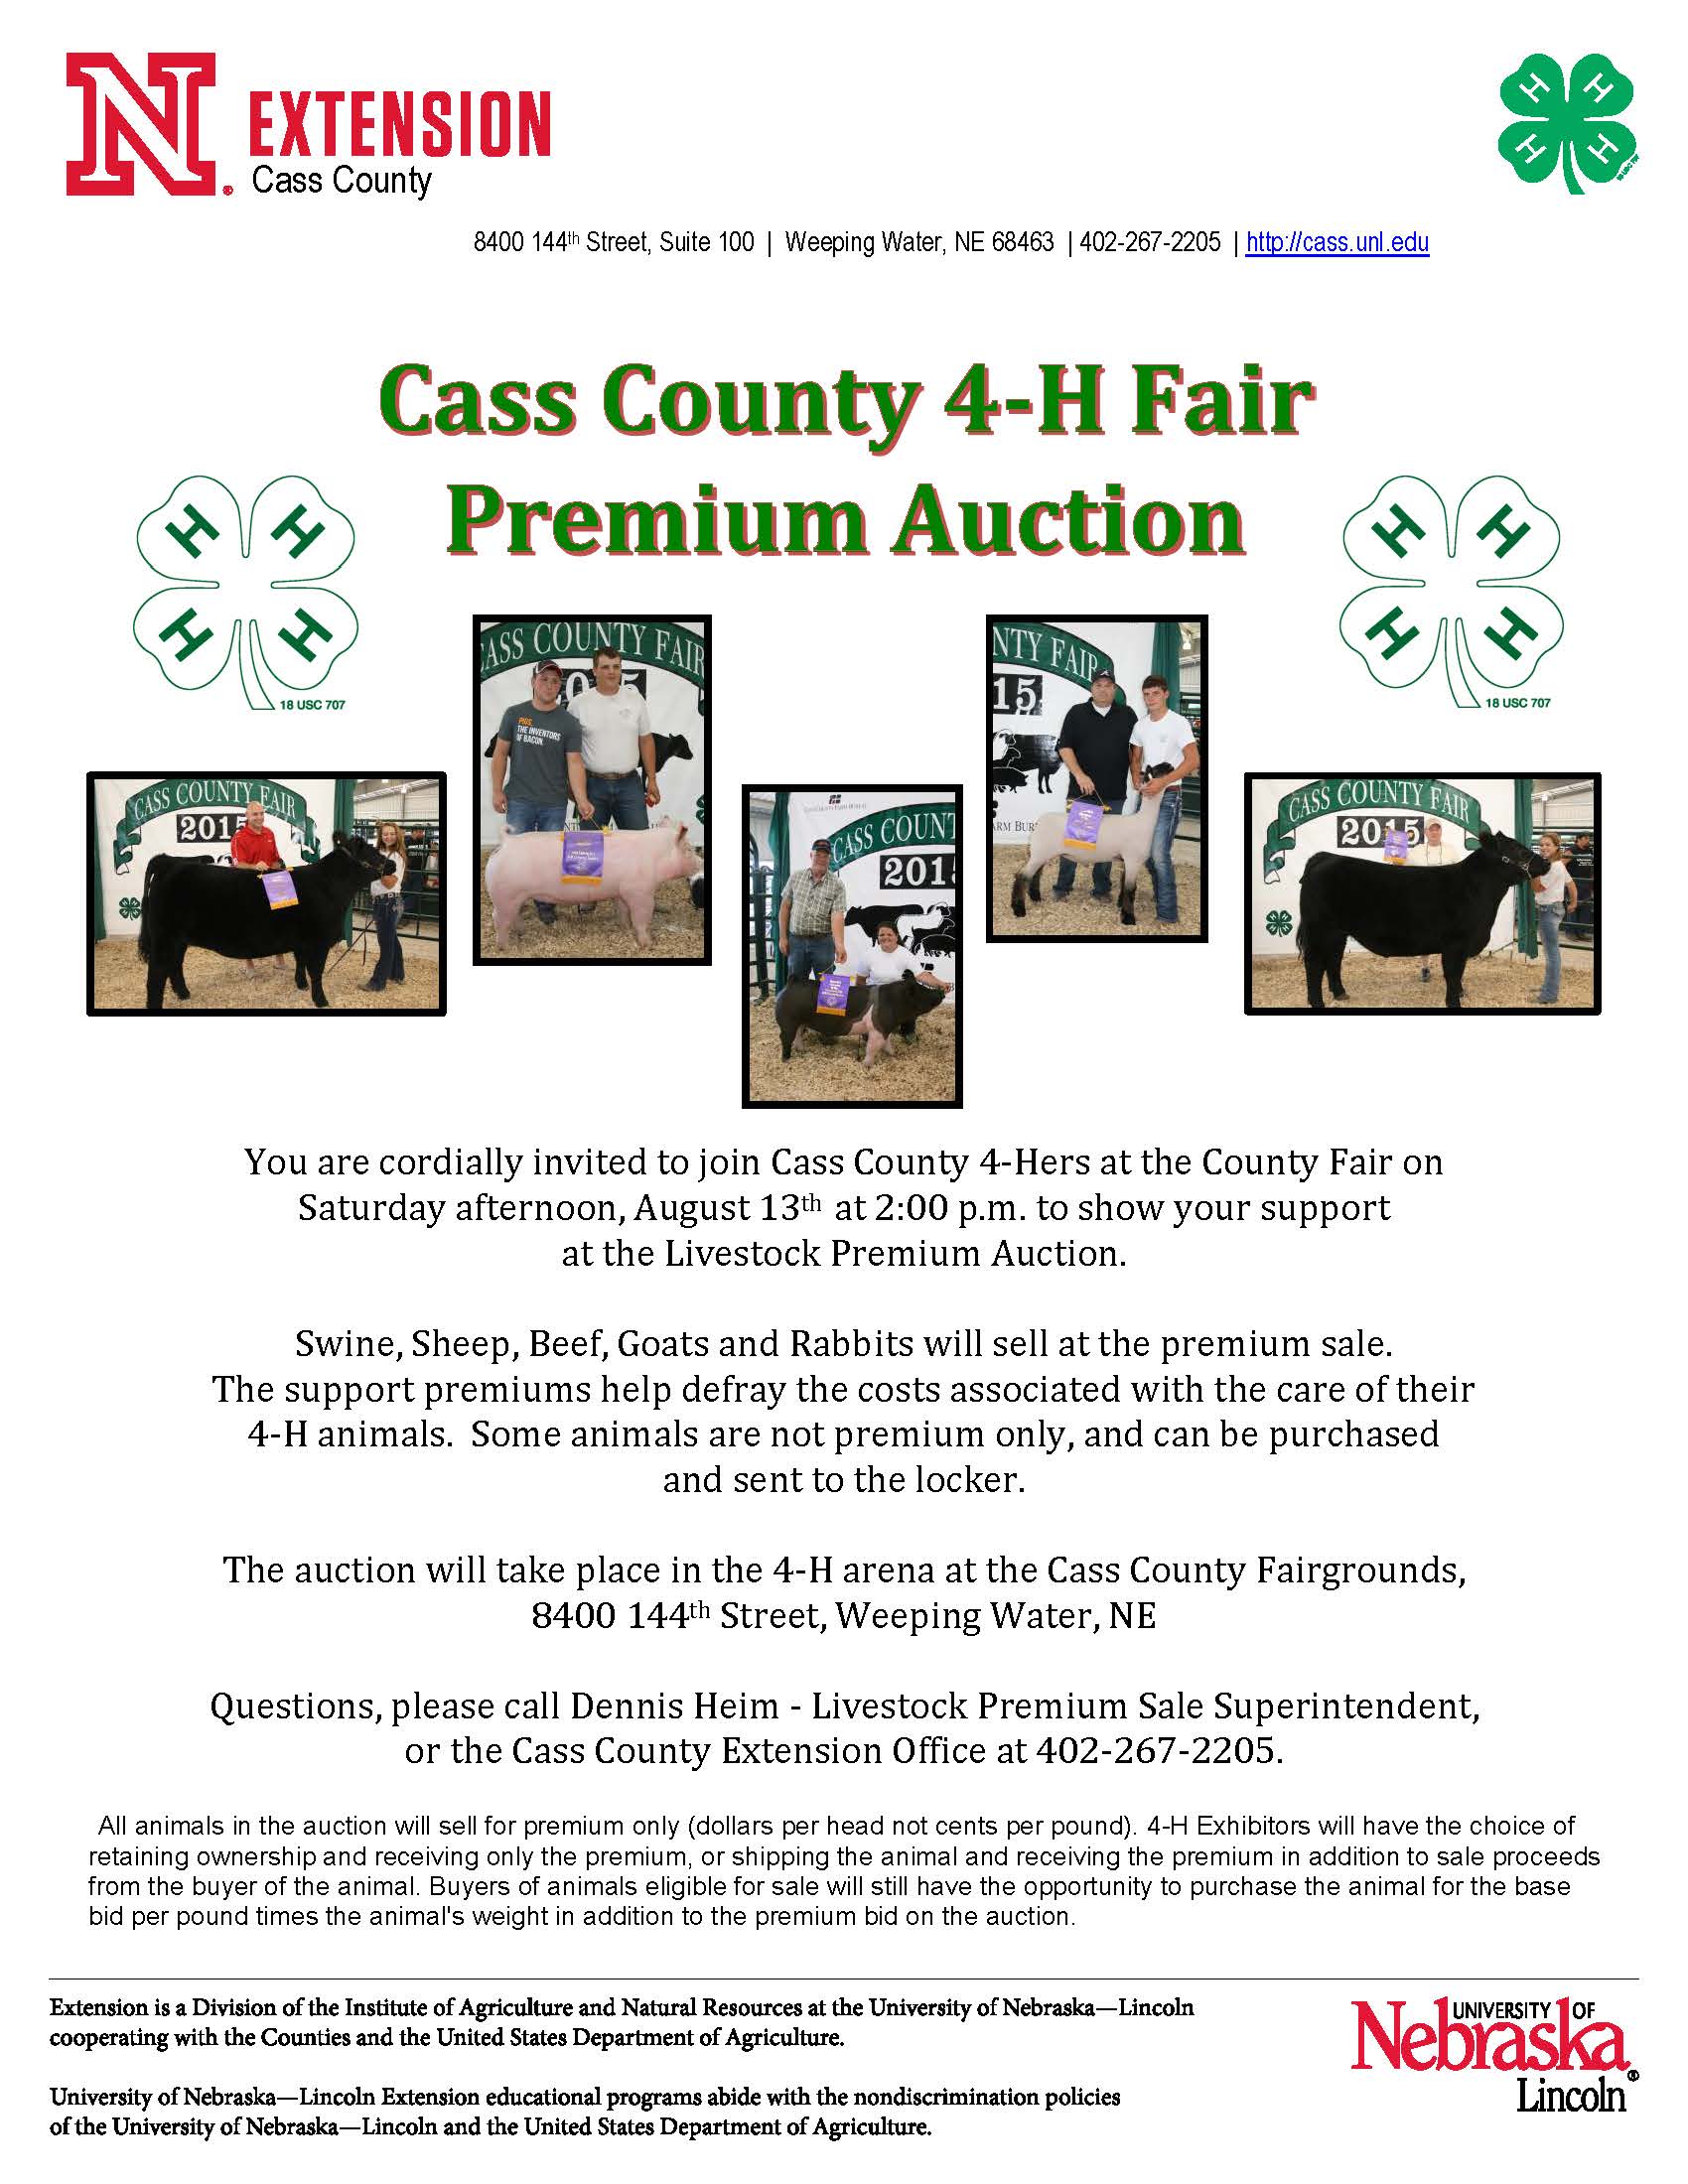 Livestock Premium Auction flyer